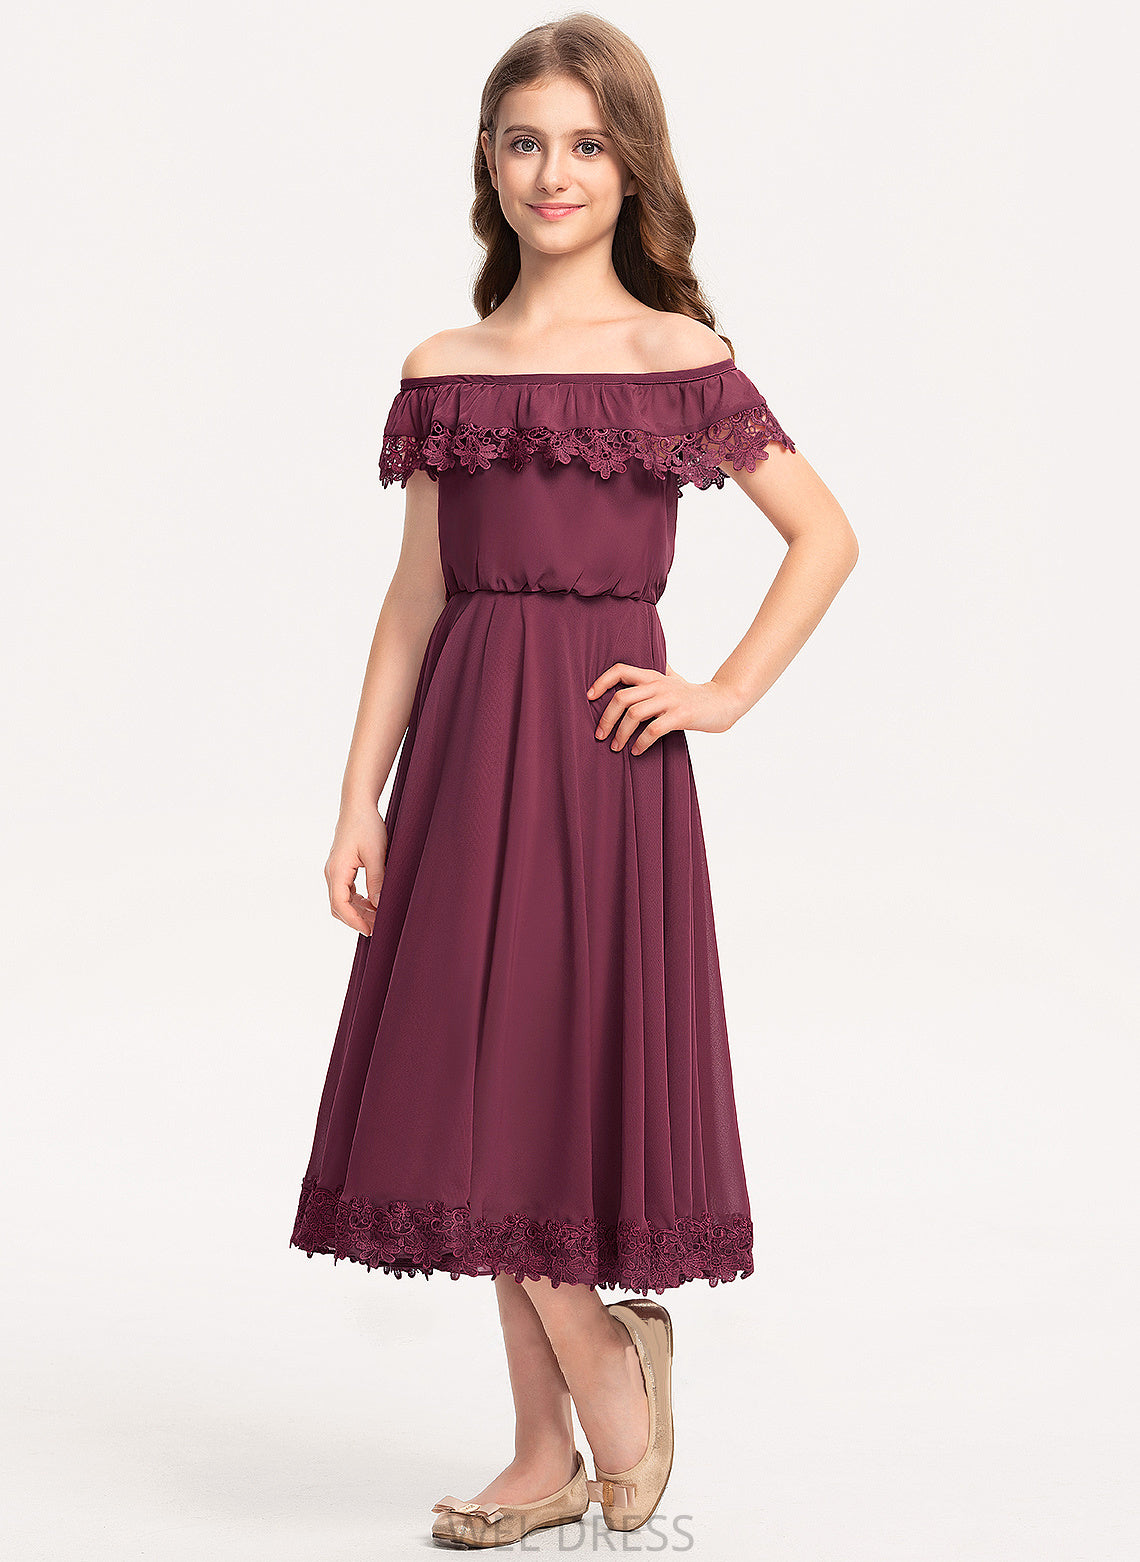 Lace Off-the-Shoulder Hazel A-Line Junior Bridesmaid Dresses Chiffon Tea-Length